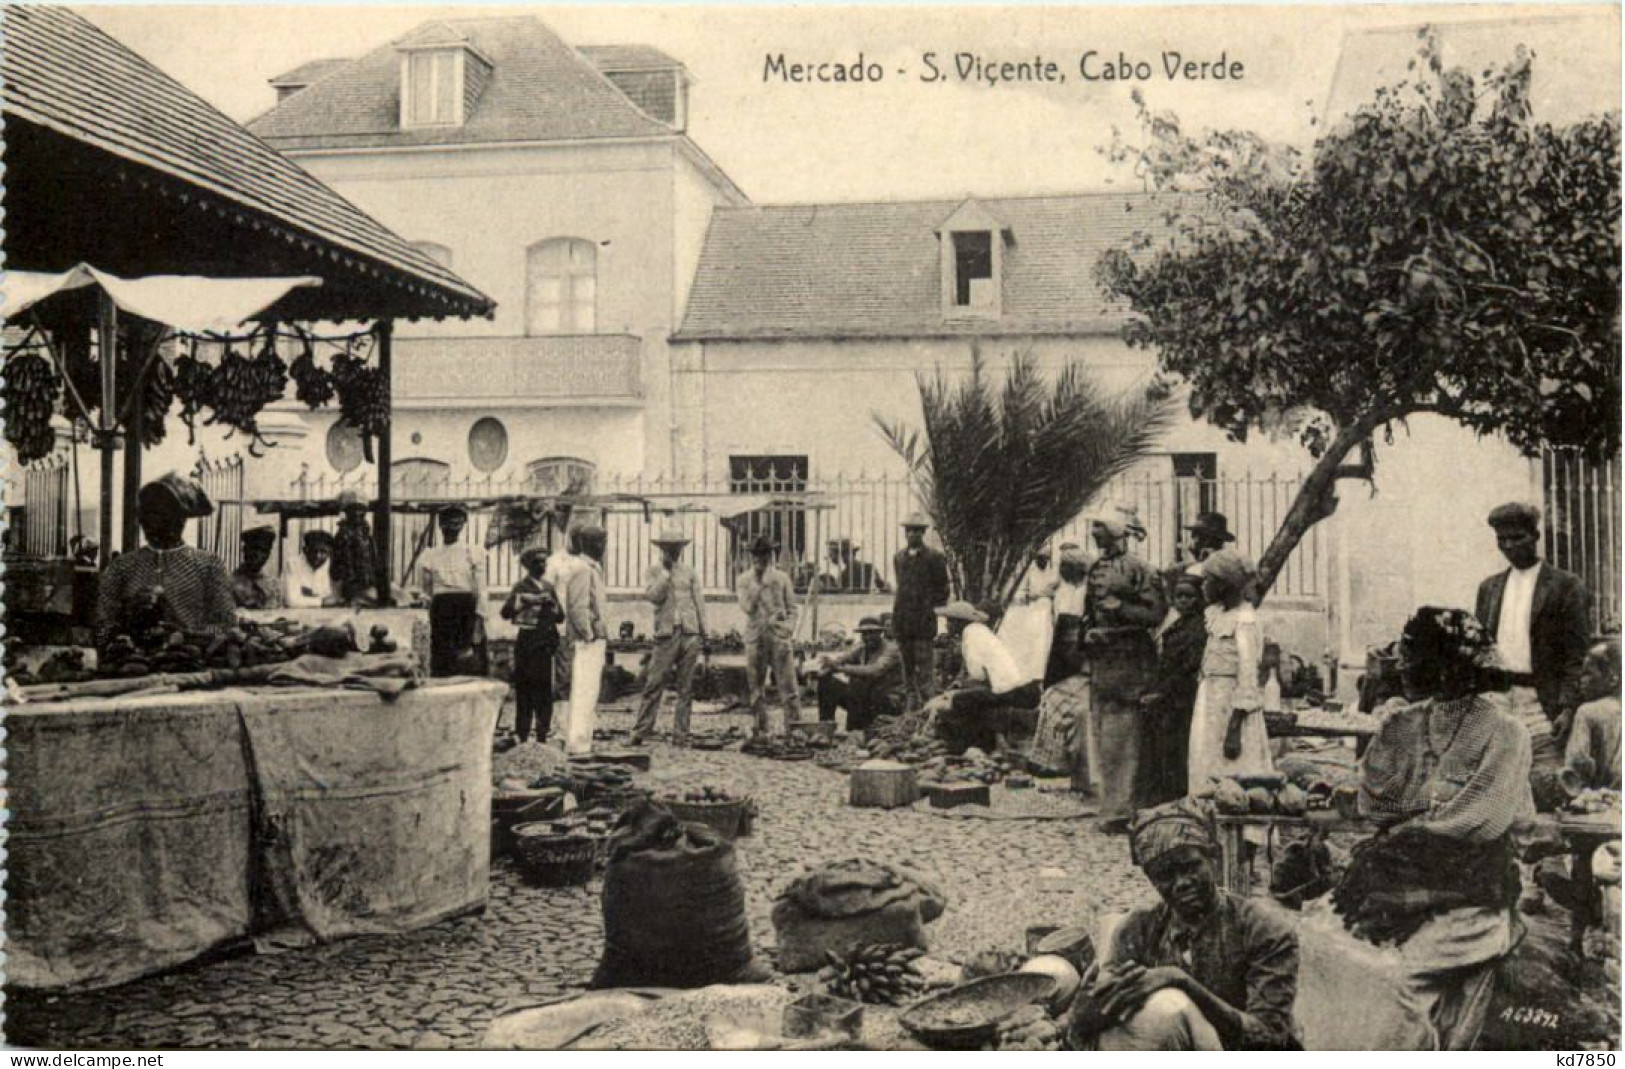 Cabo Verde - Mercado S. Vicente - Cape Verde